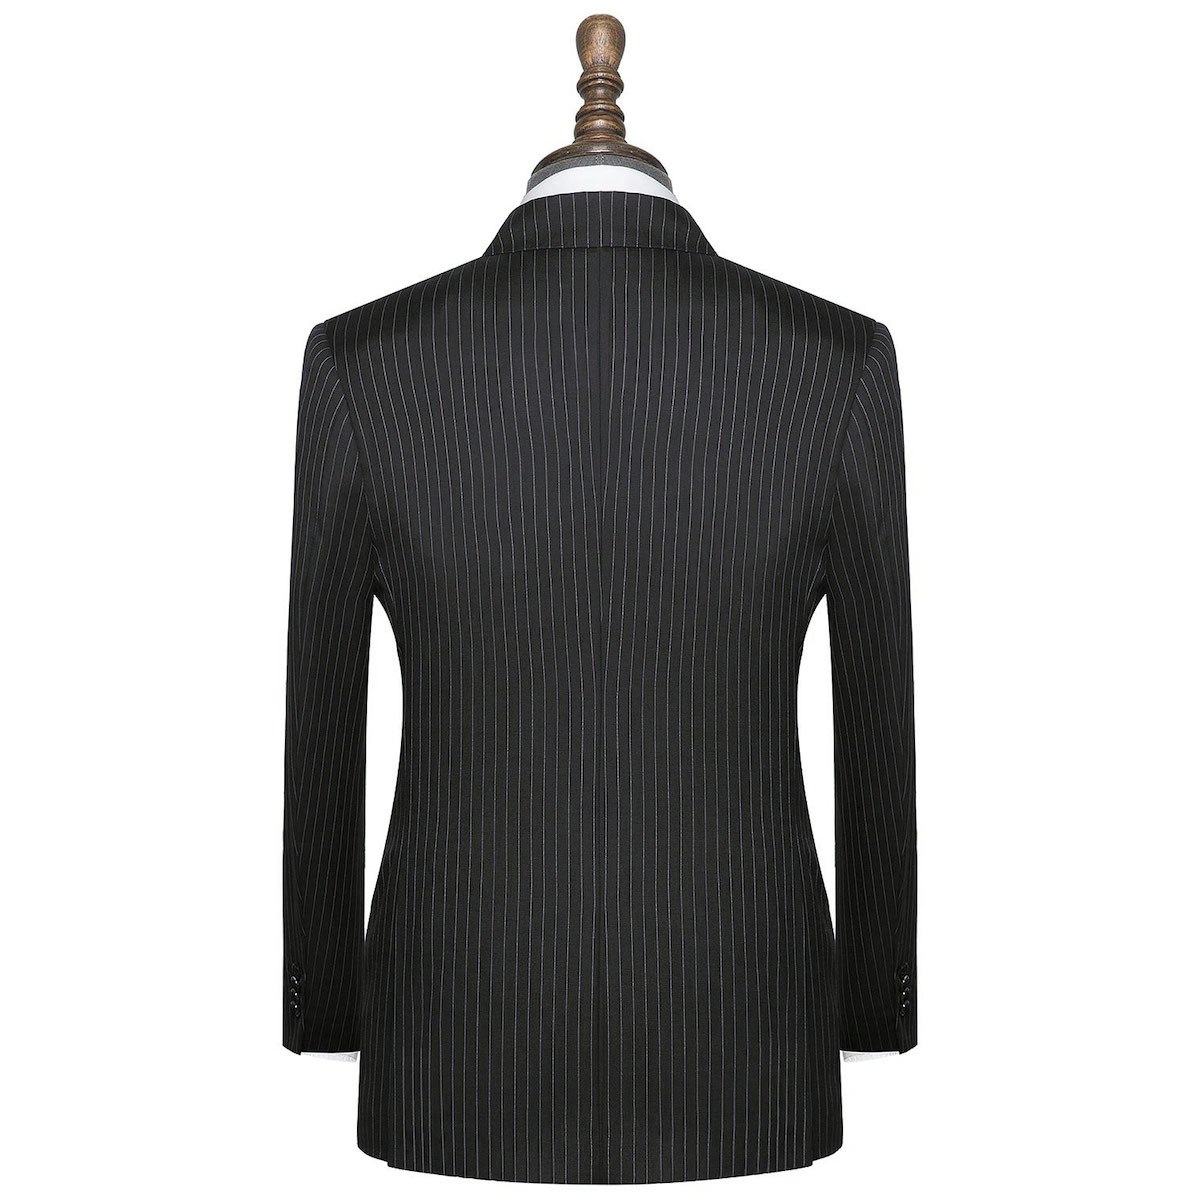 InStitchu Collection The Bleecker Navy Wool Pinstripe Jacket